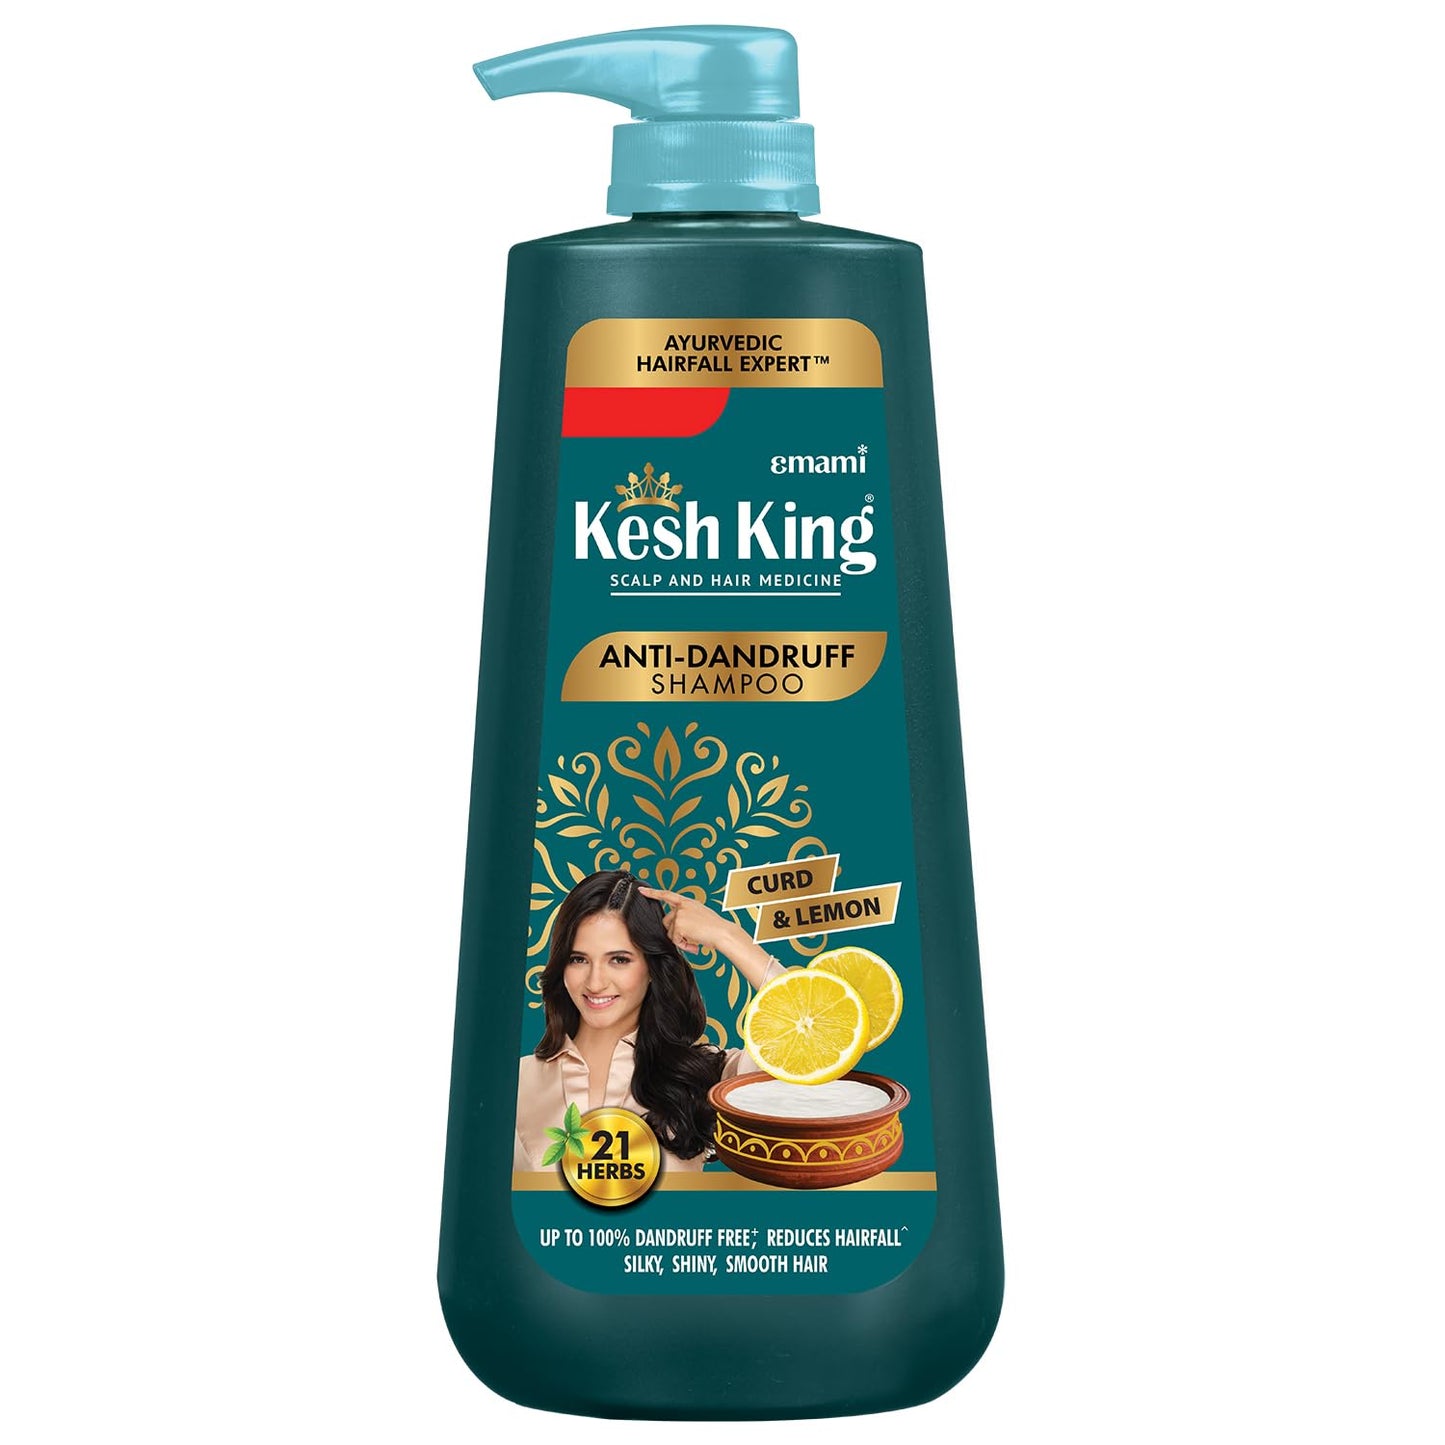 Emami Kesh King Anti-Dandruff Shampoo - buy in usa, canada, australia 